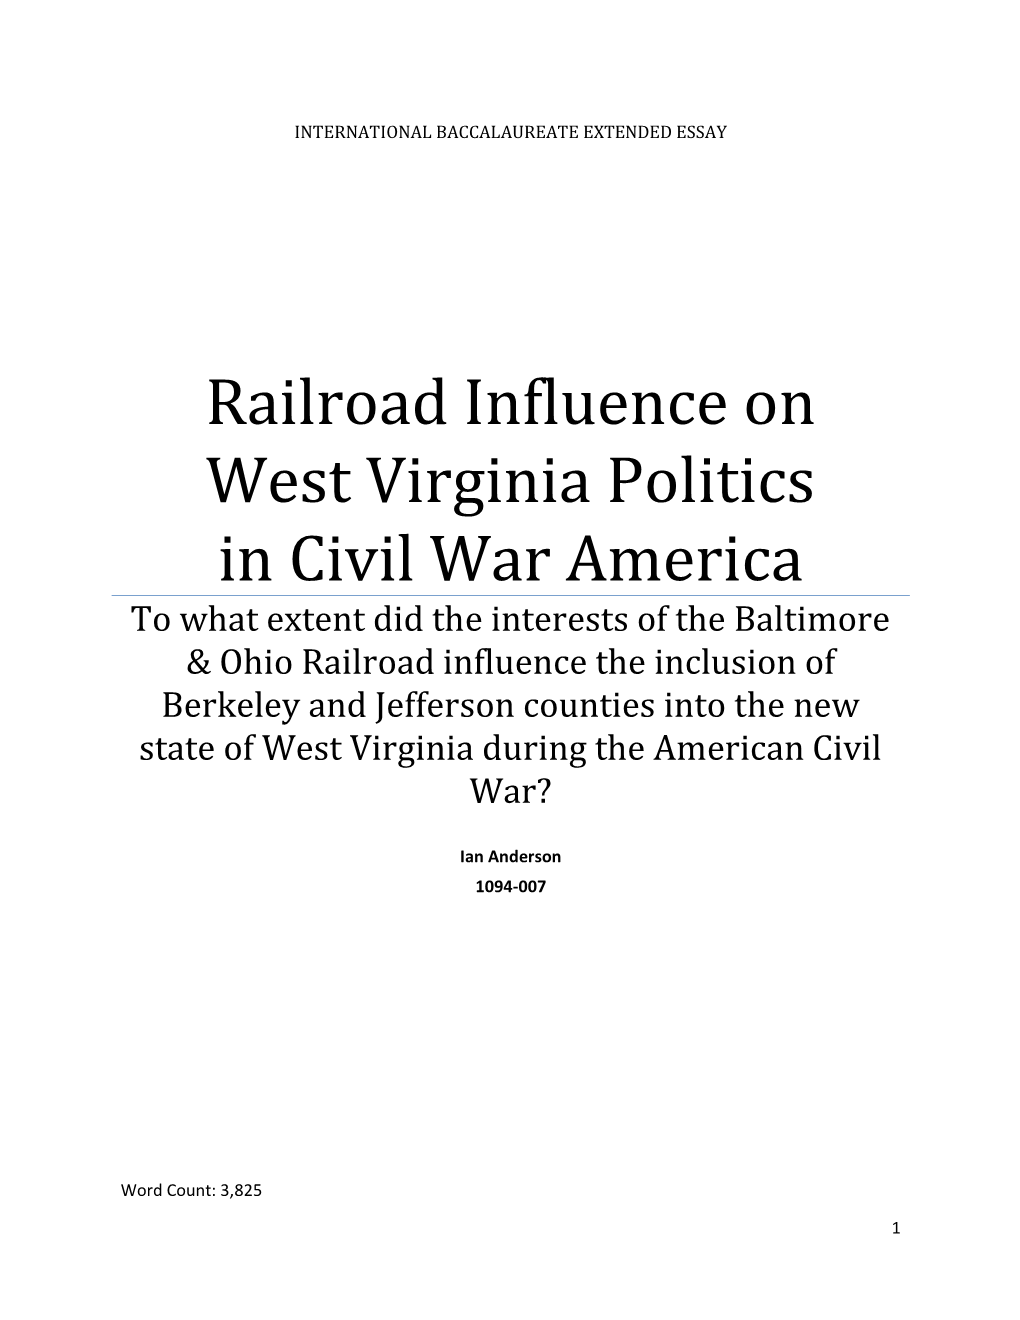 Railroad Influence on West Virginia Politics in Civil War America